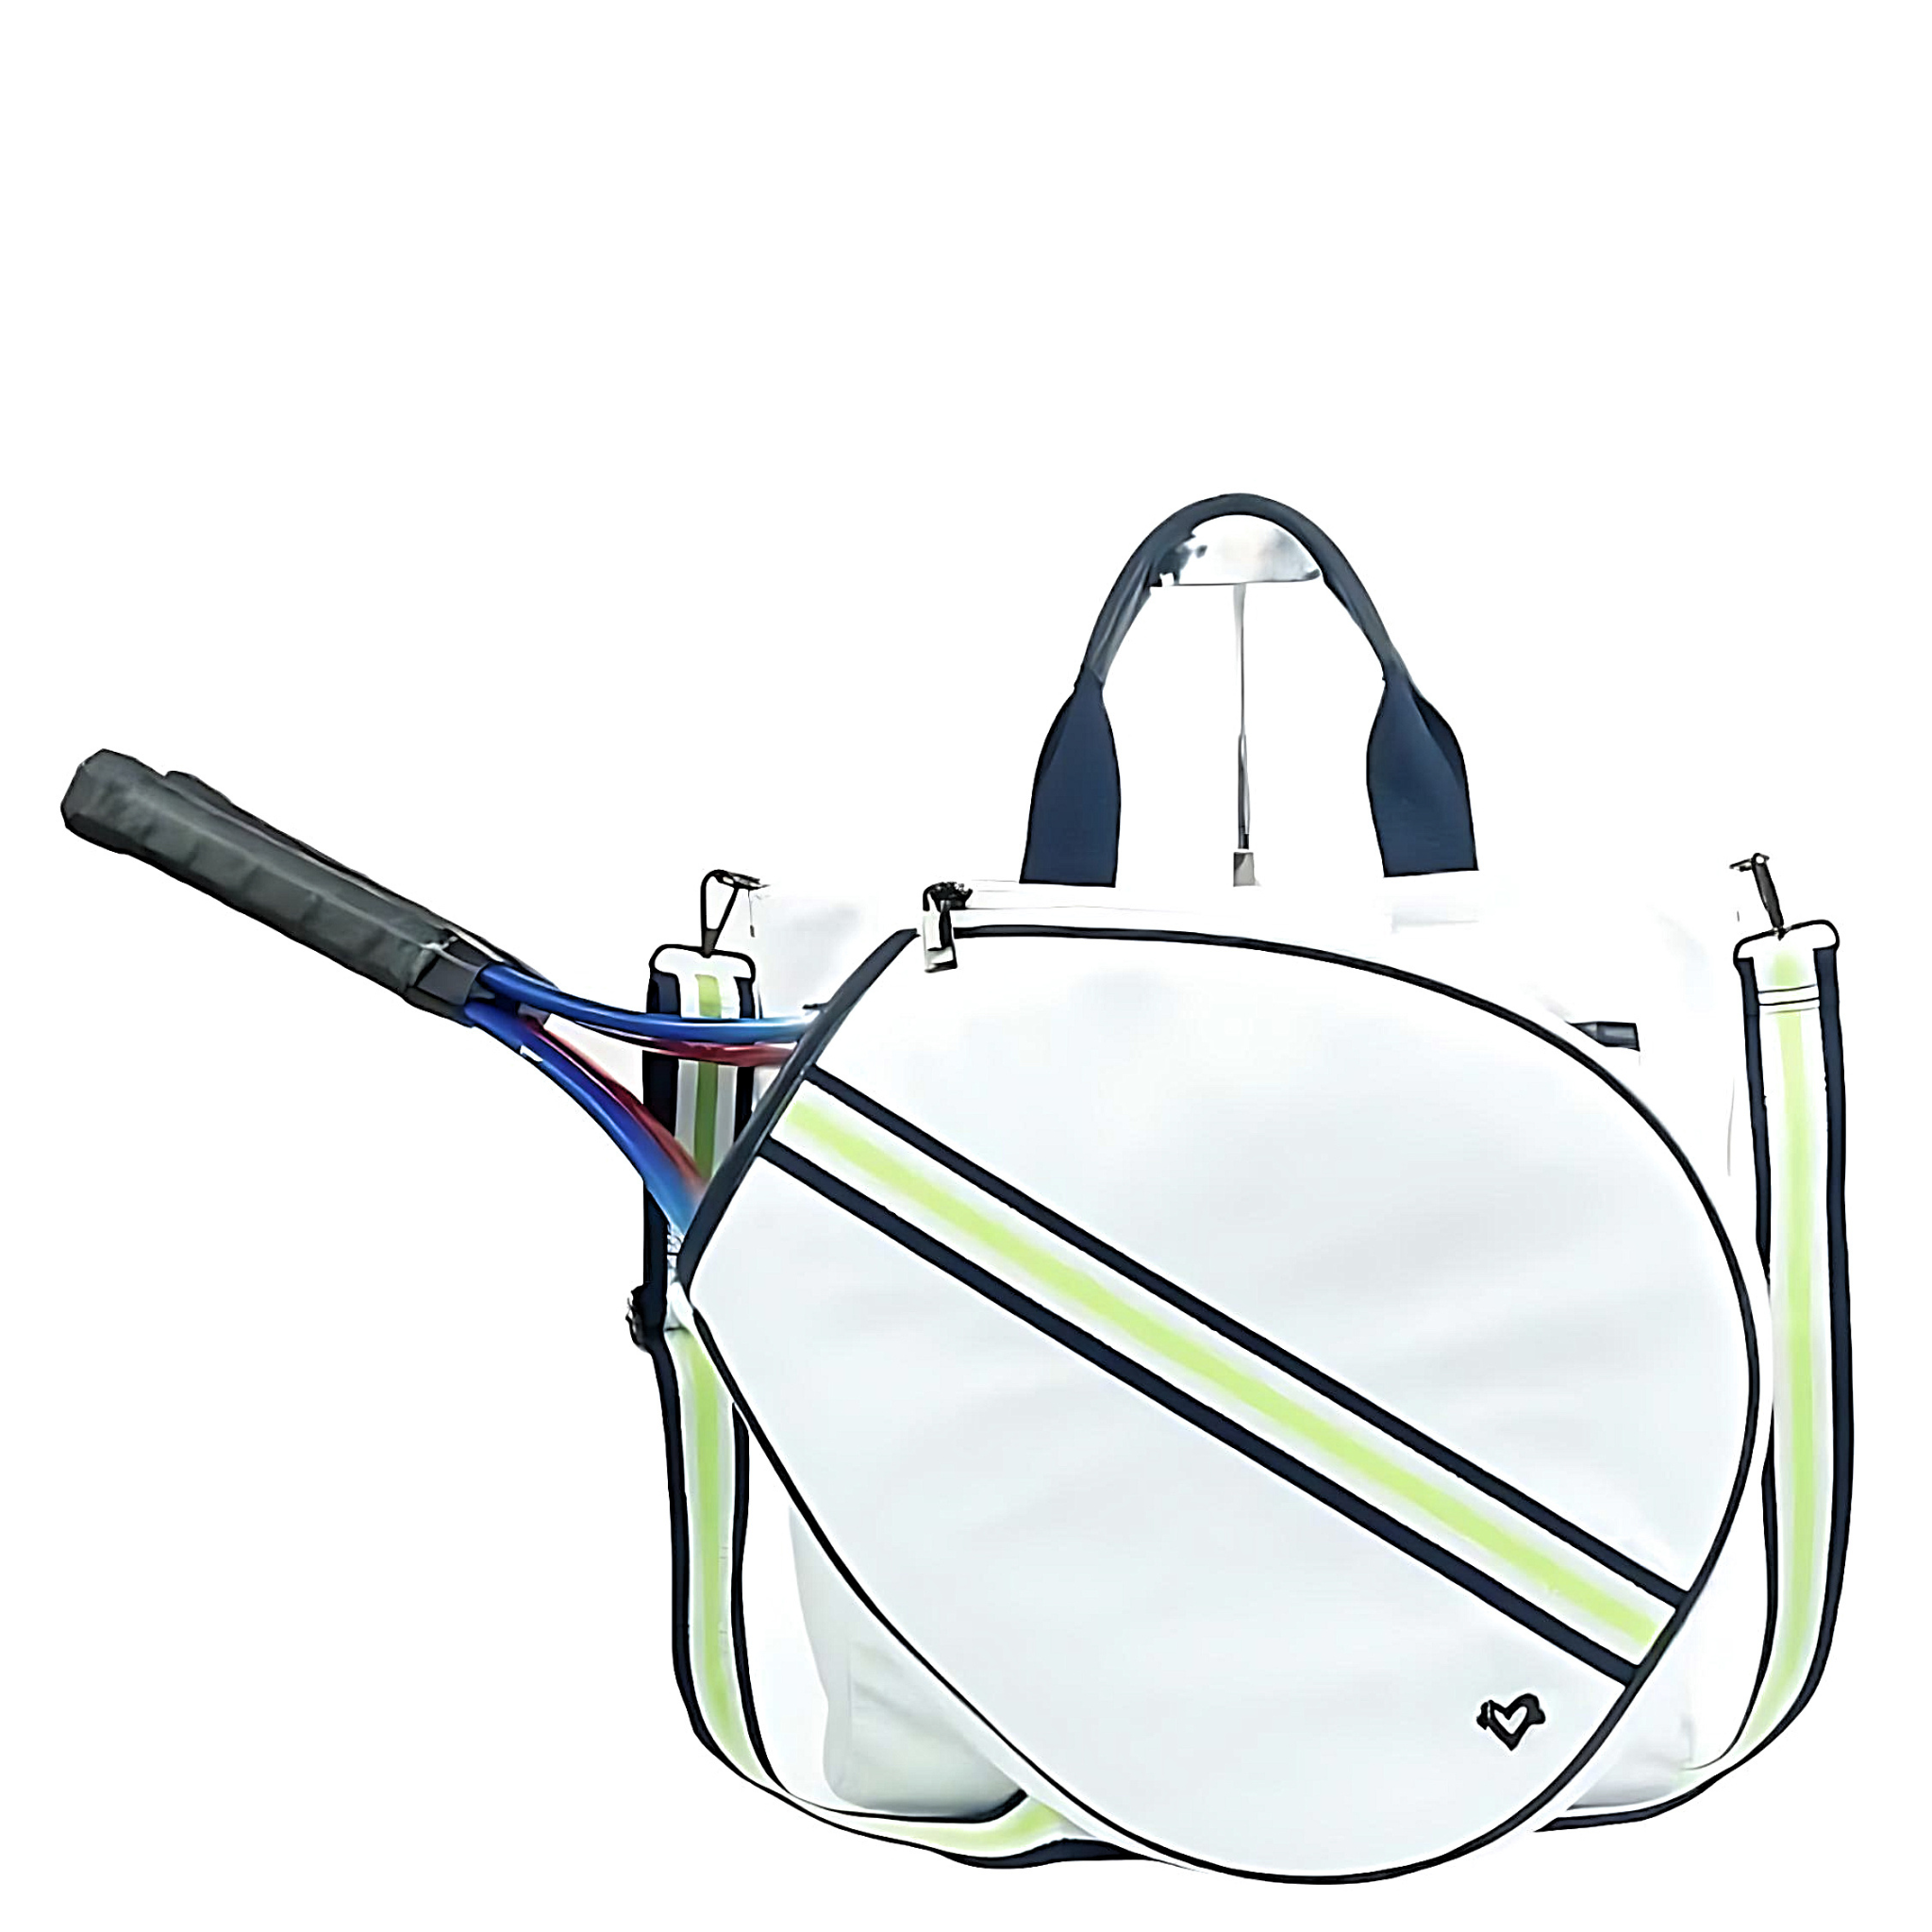 Tofino Tennis Bag